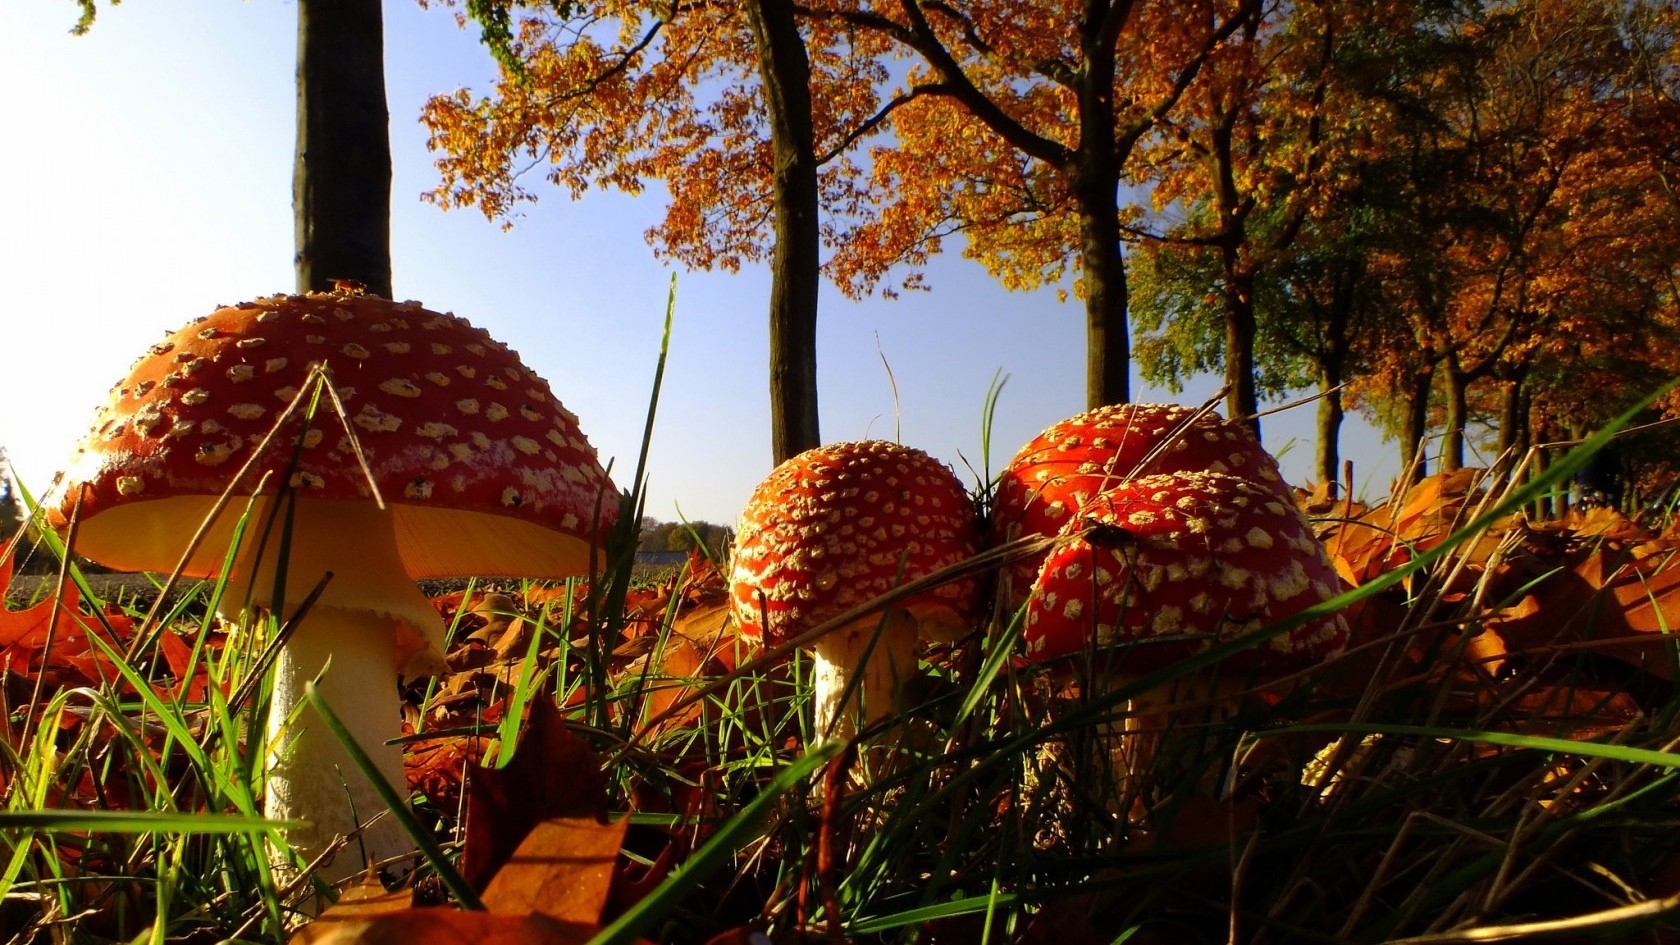 Forest Mushrooms for 1680 x 945 HDTV resolution